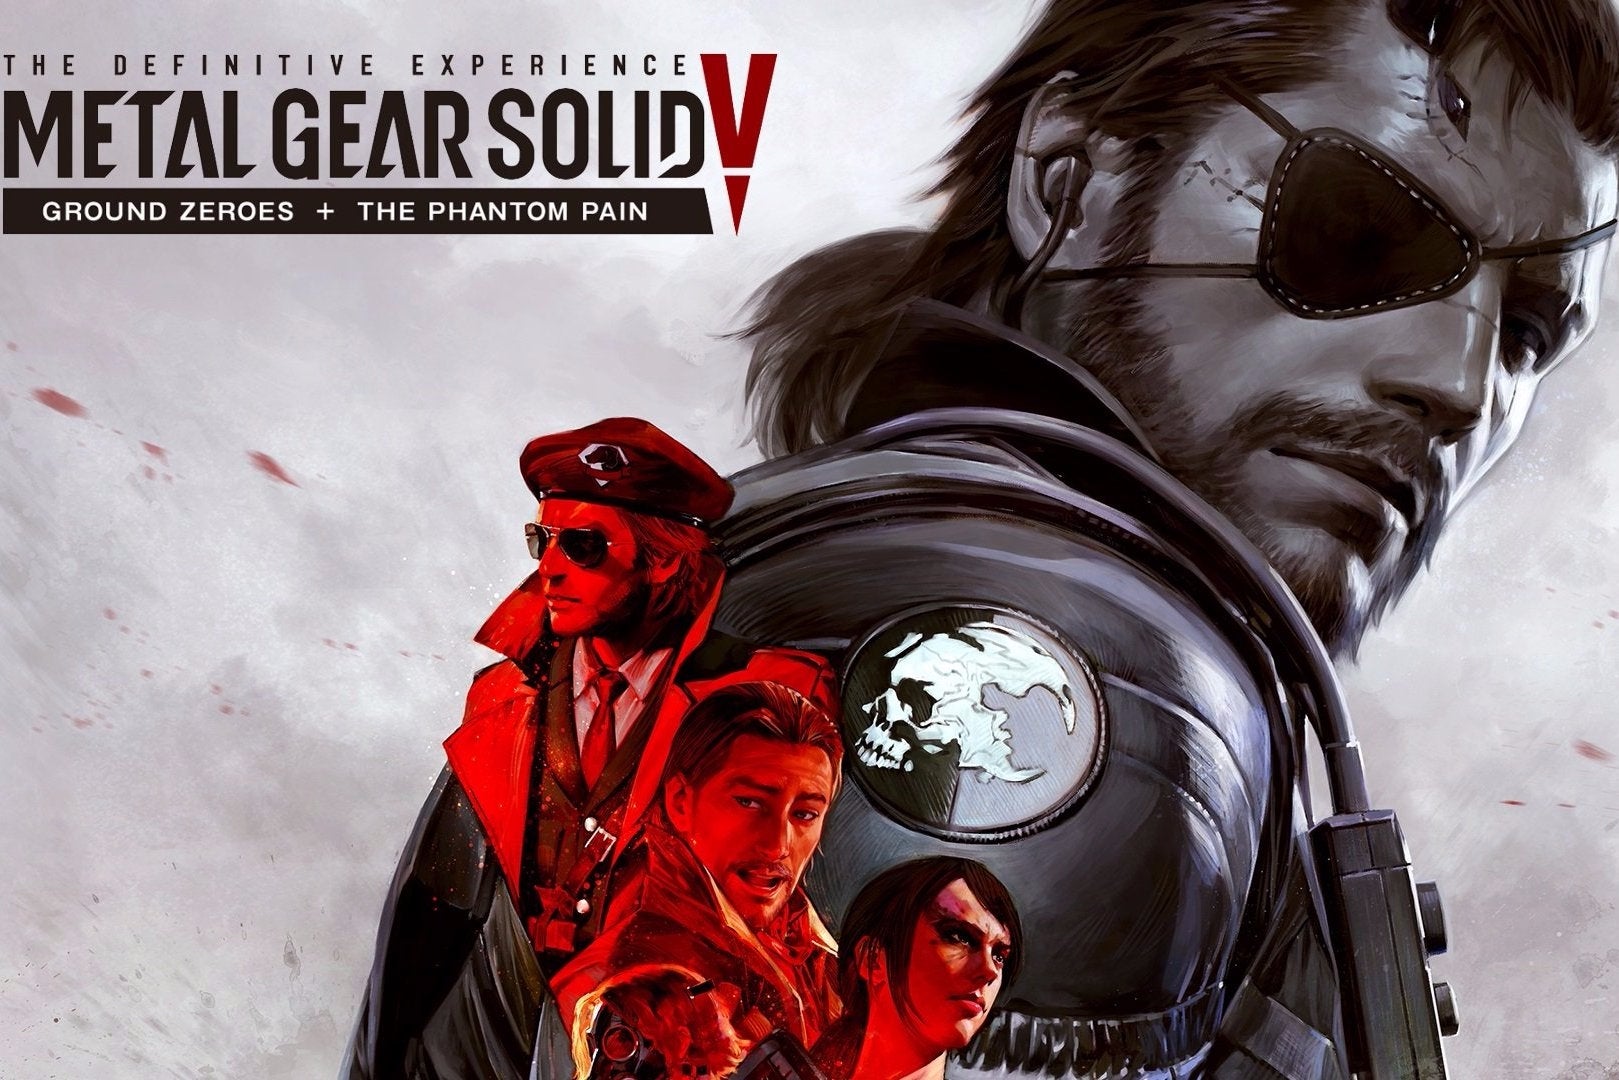 Imagen para Tráiler de Metal Gear Solid 5: The Definitive Experience